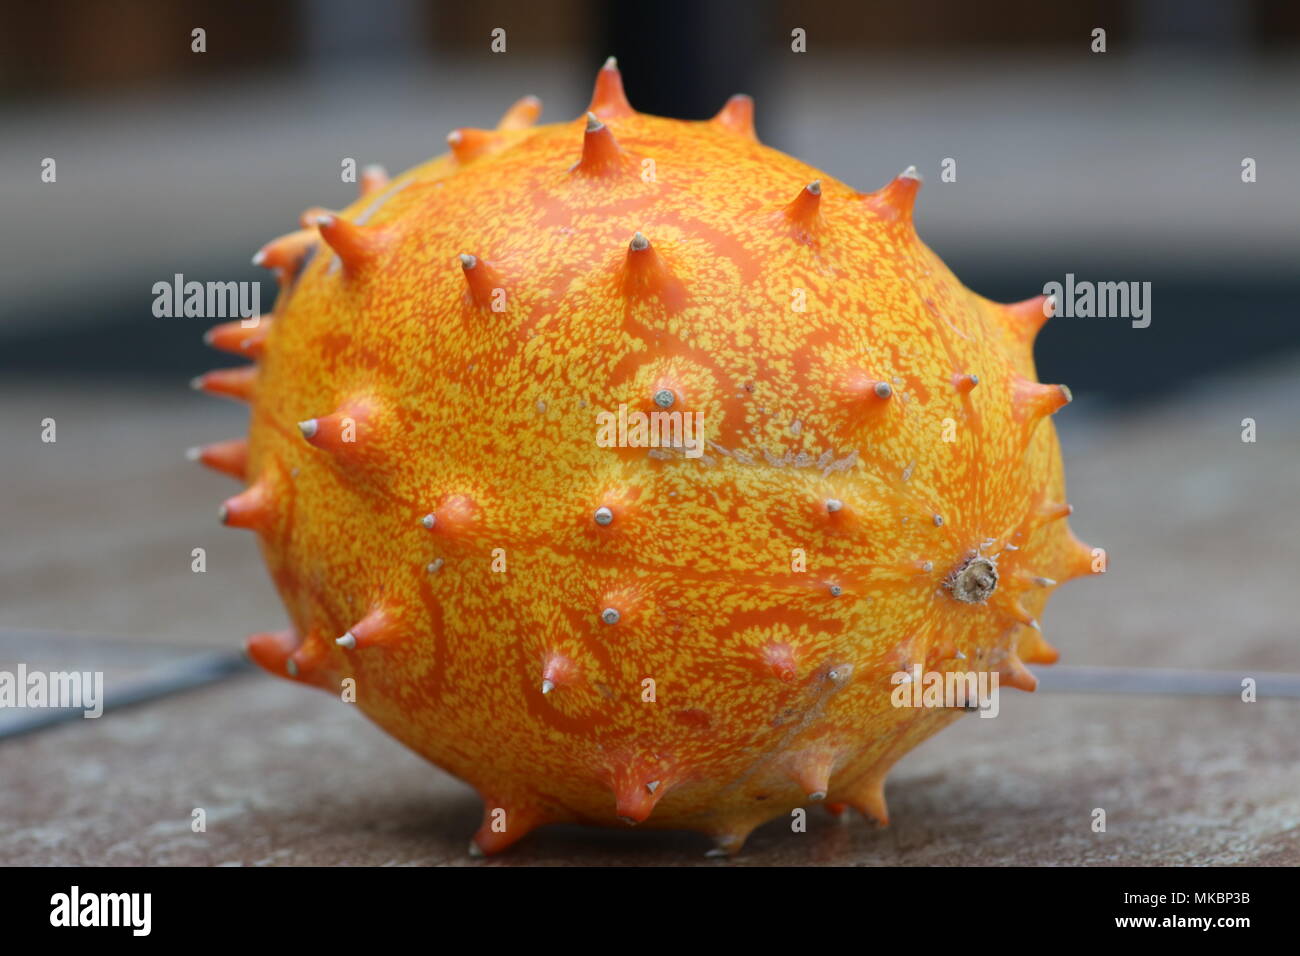 Closeup of a whole kiwano horned melon Stock Photo